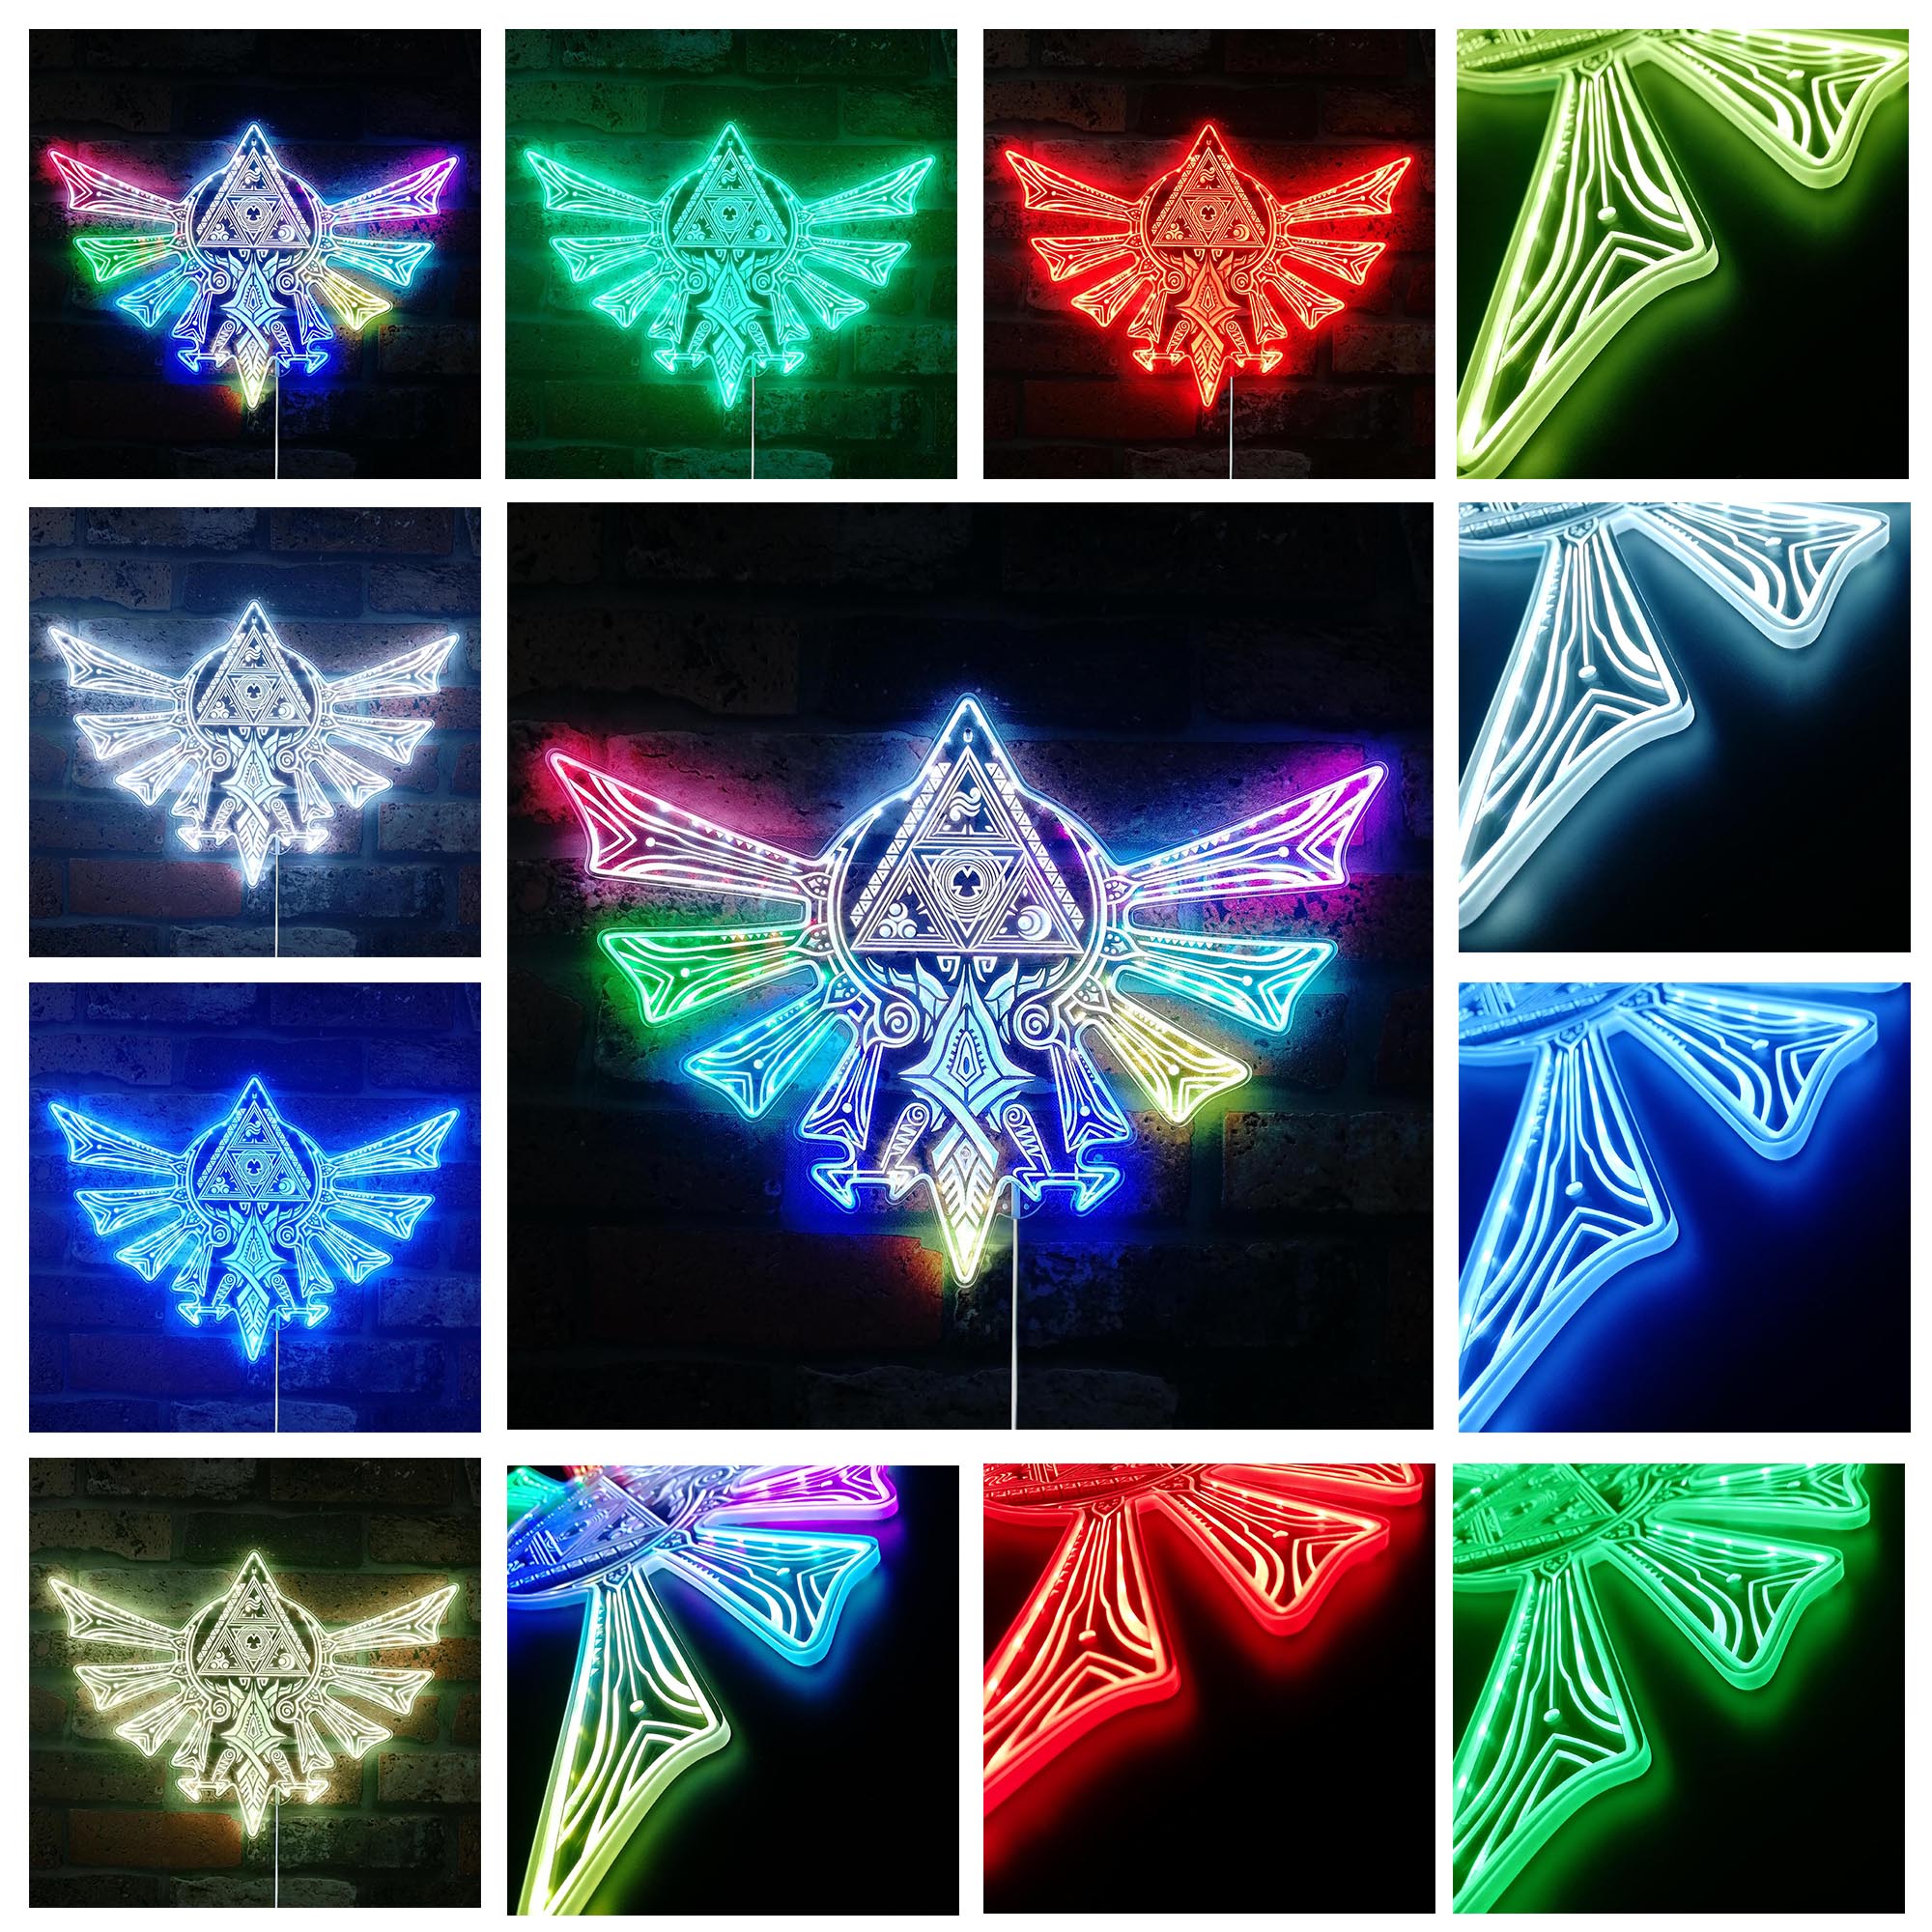 Legend of Zelda Triforce Dynamic RGB Edge Lit LED Sign